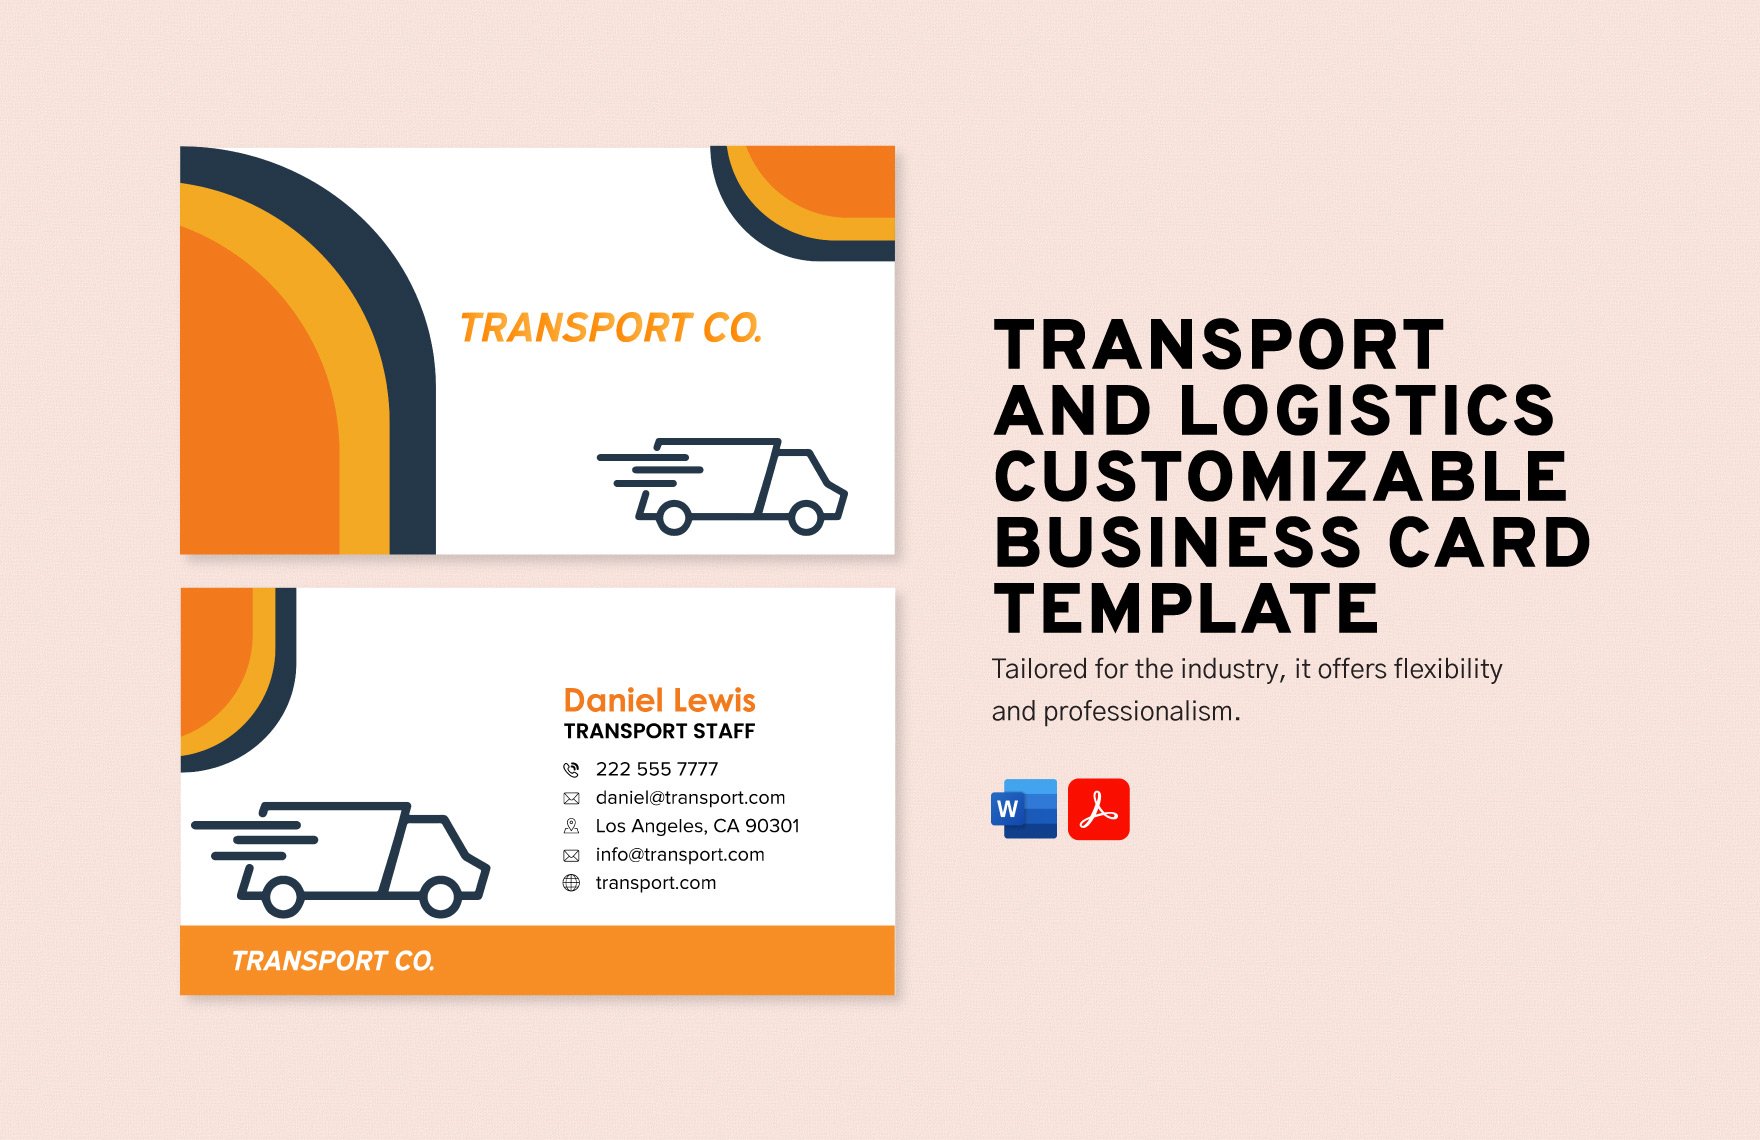 Transport and Logistics Customizable Business Card Template